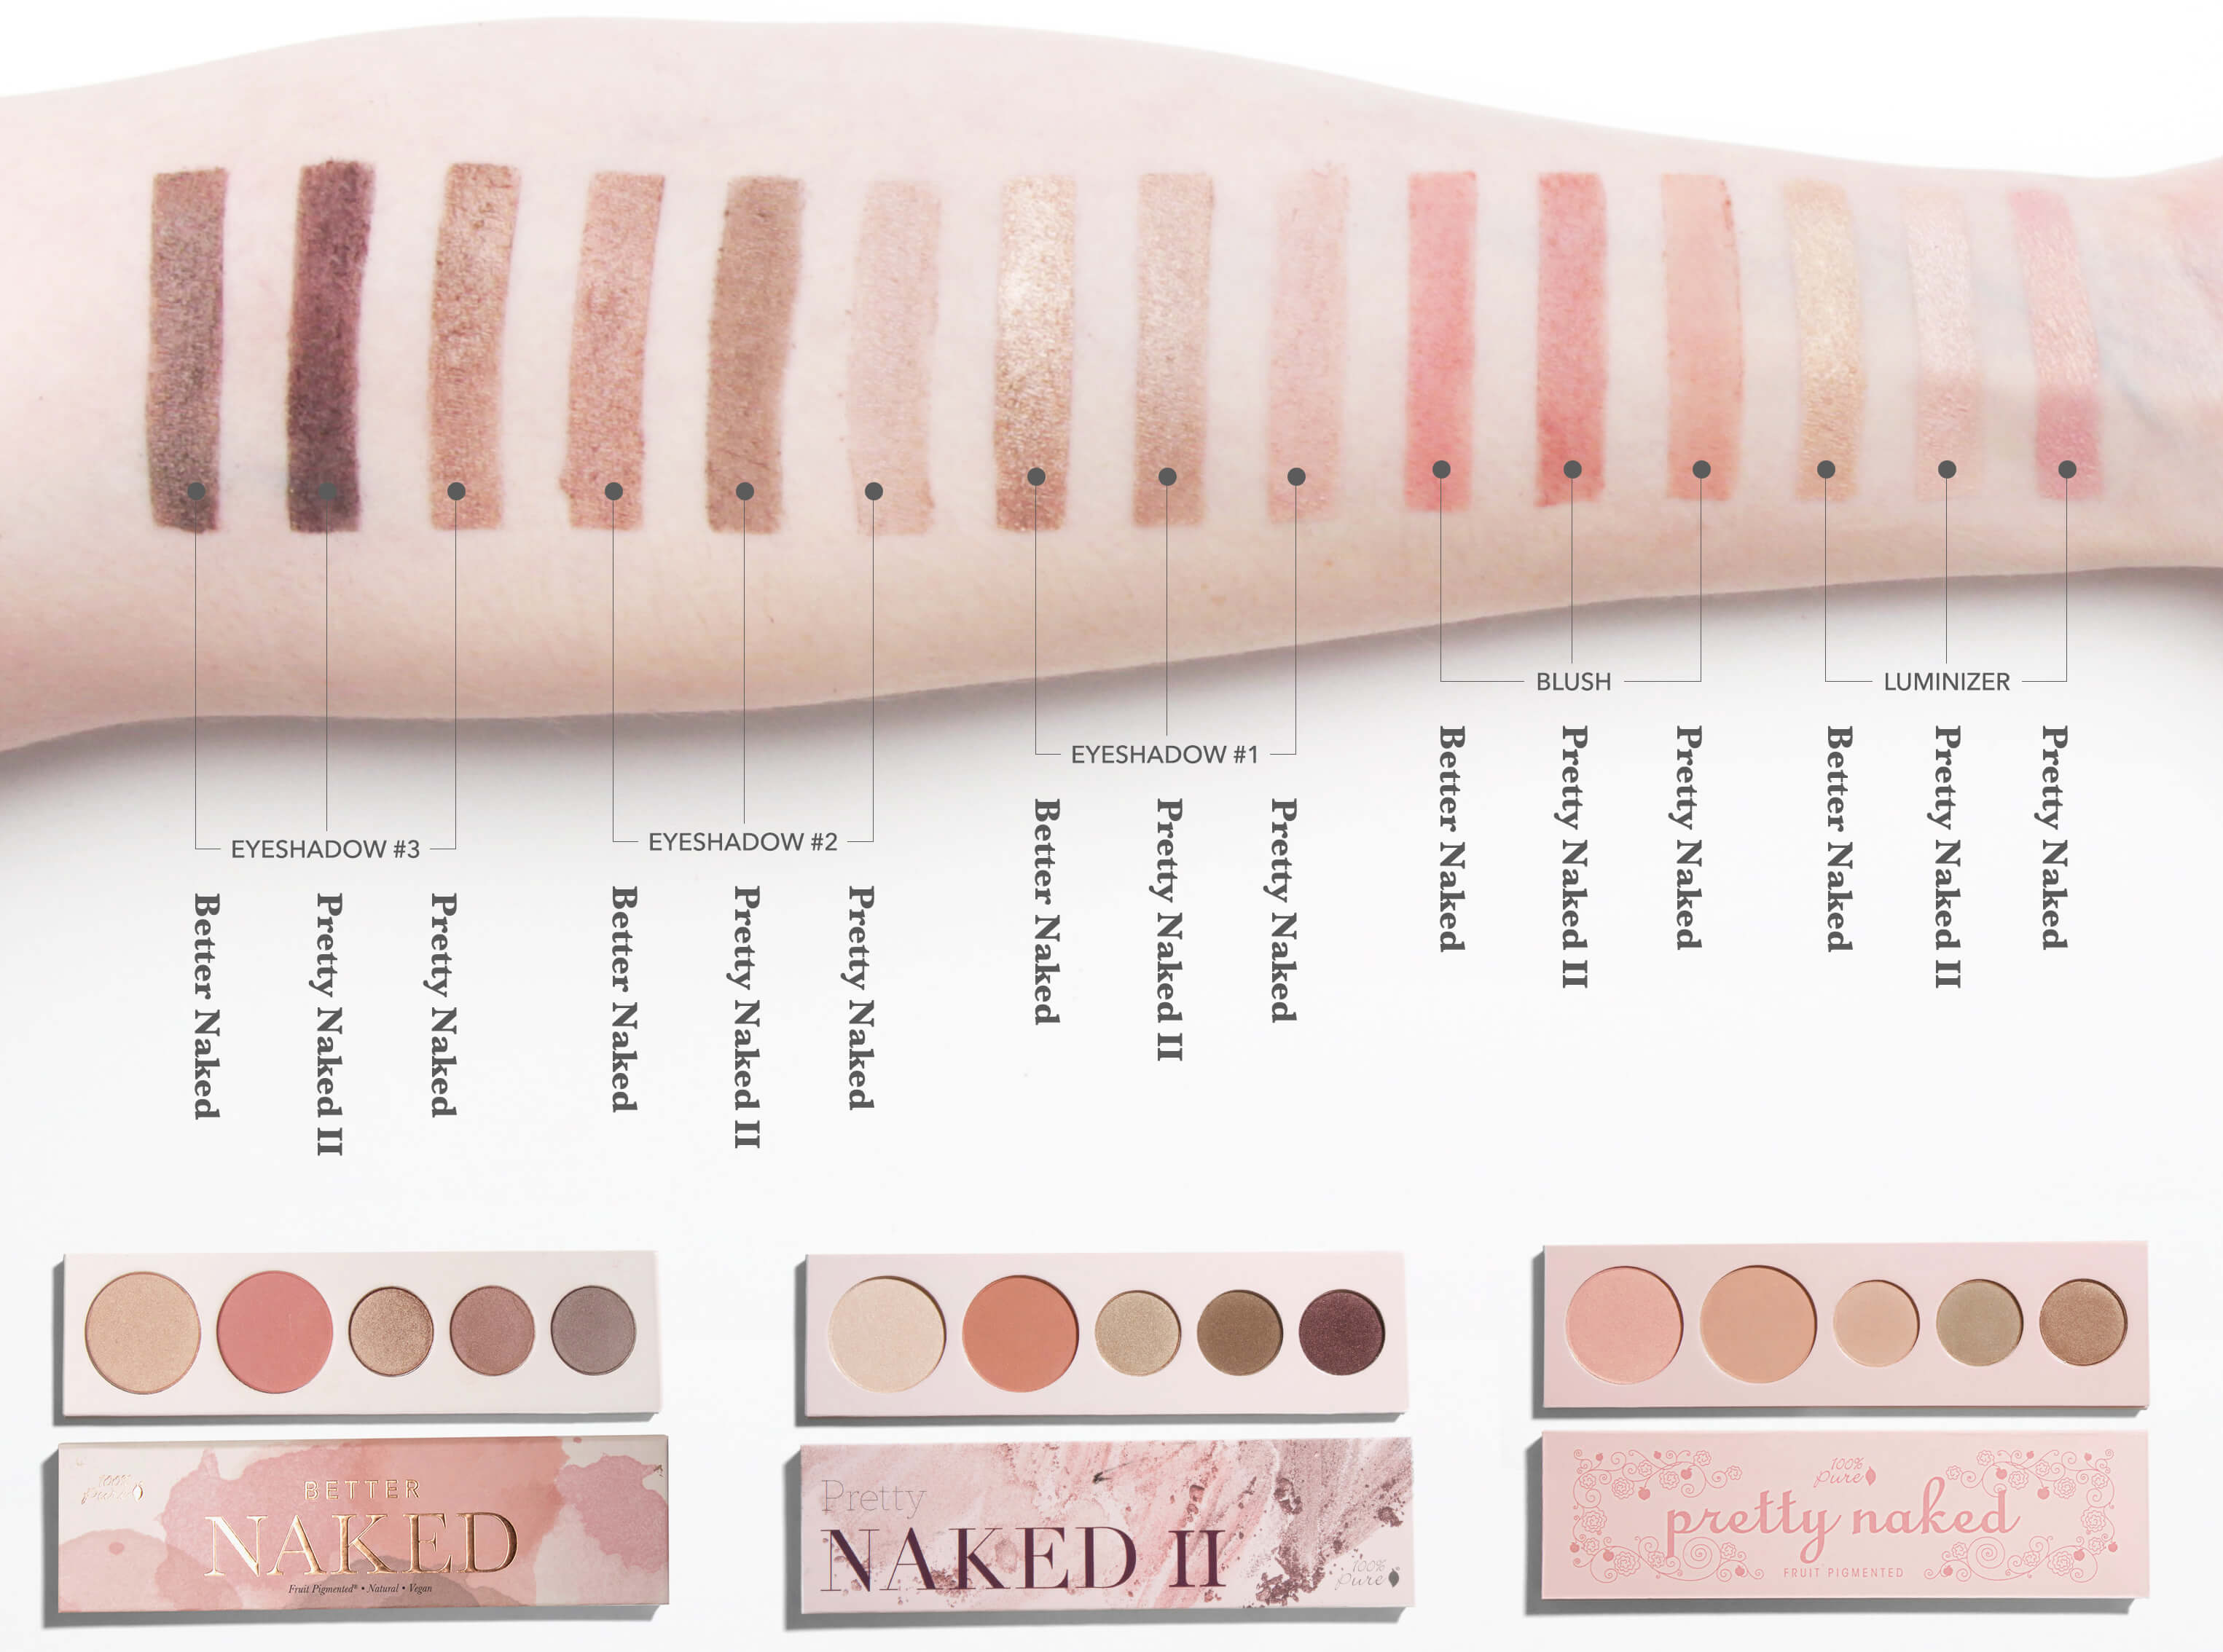 Naked Palette Comparison Guide